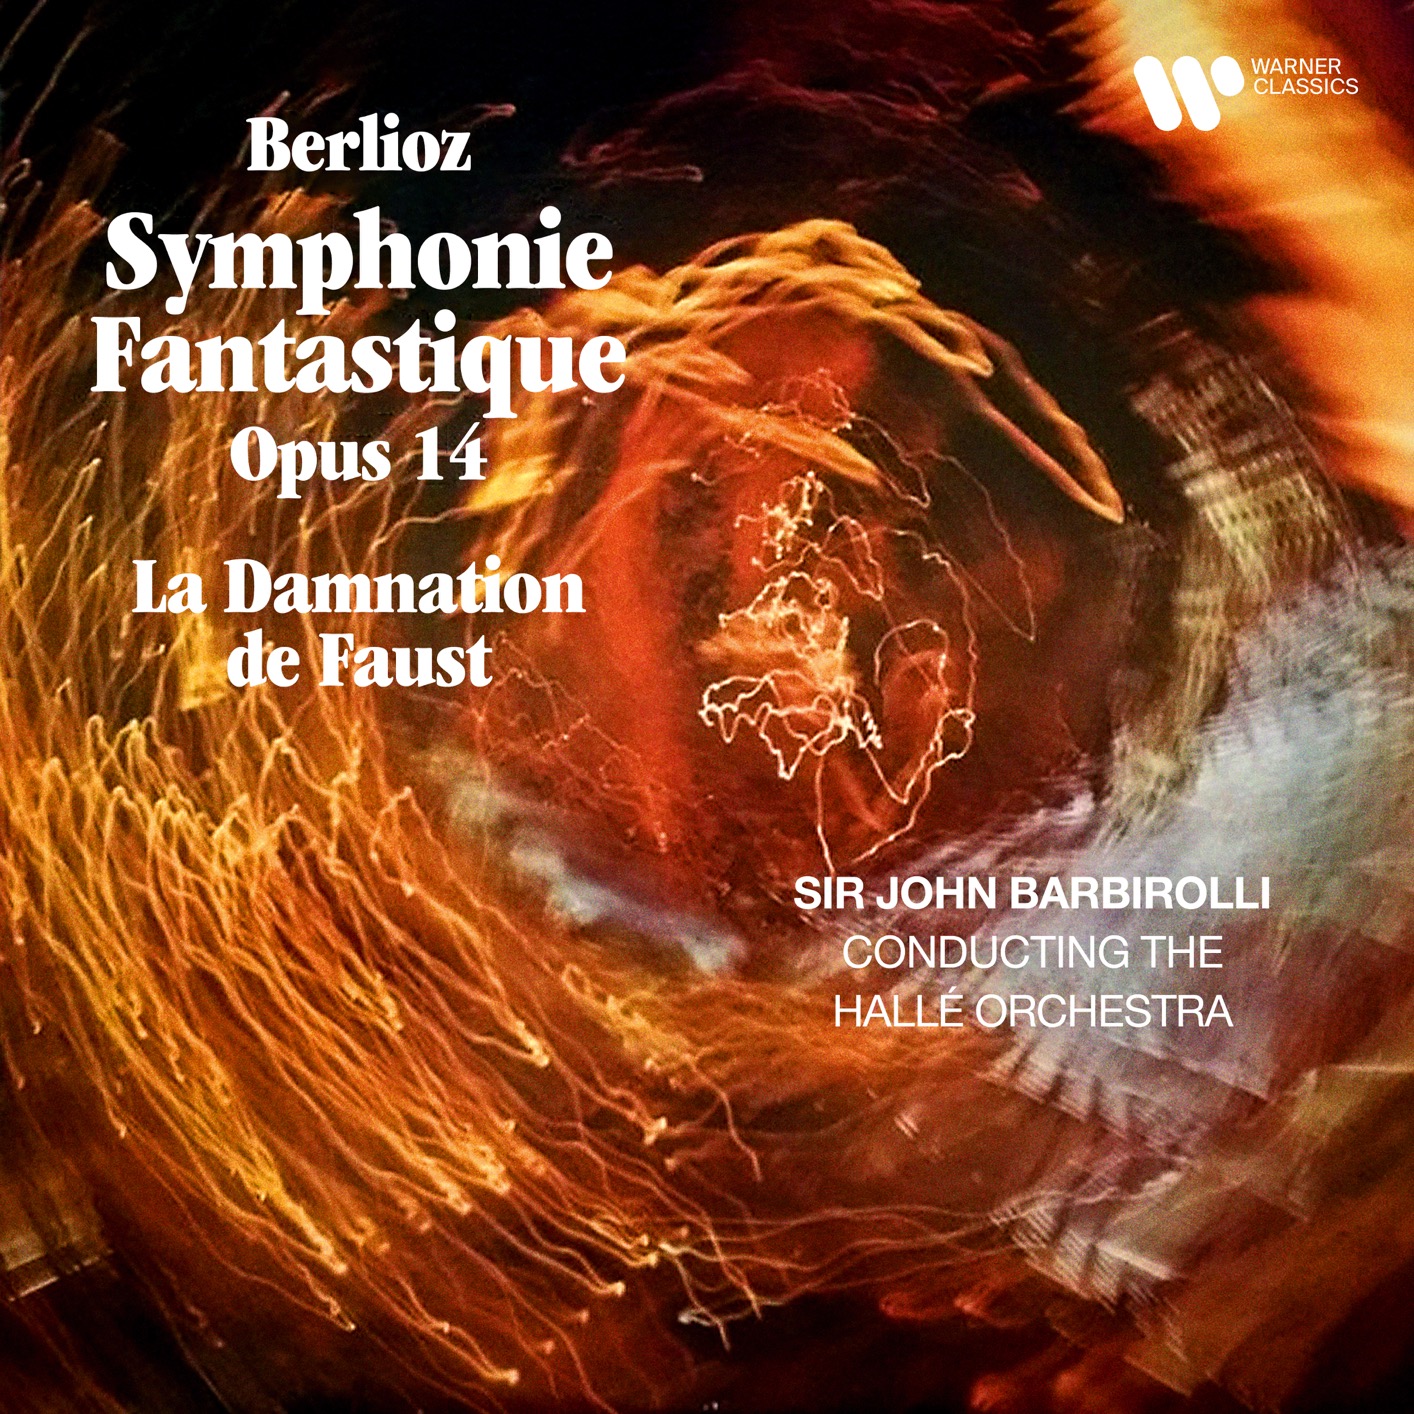 Halle Orchestra & Sir John Barbirolli - Berlioz - Symphonie fantastique, Op. 14 (1964/2020) [FLAC 24bit/192kHz]